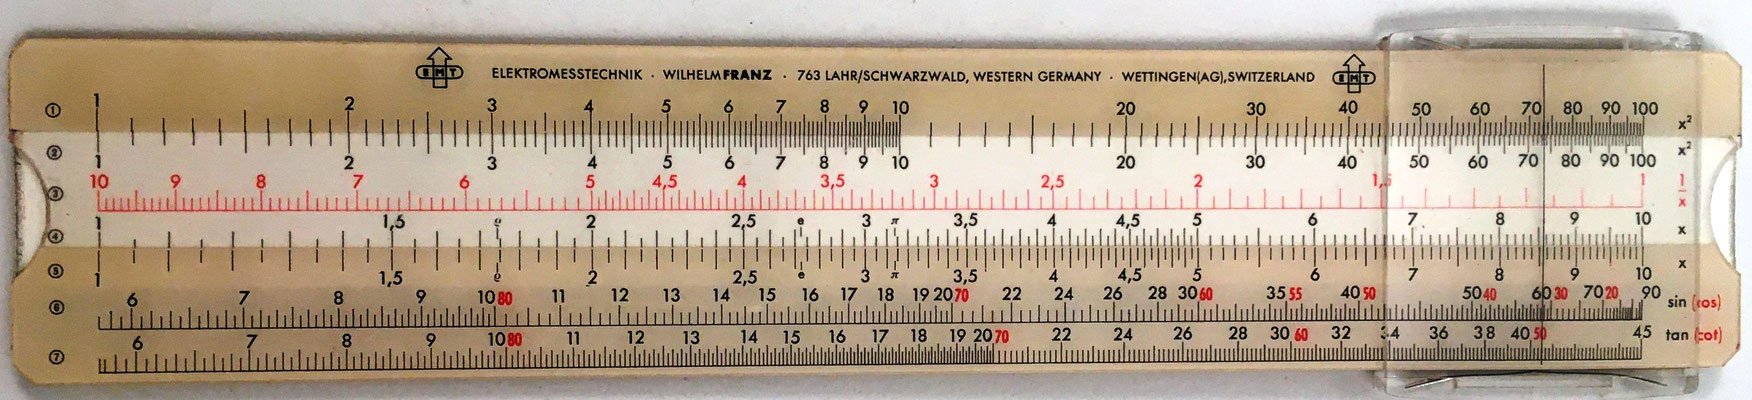 Regla EMT Elektromesstechnik, modelo IWA 0269, fabricada por IWA Rechenschieberfabrik (Alemania y Suiza), año 1963, 21x4 cm